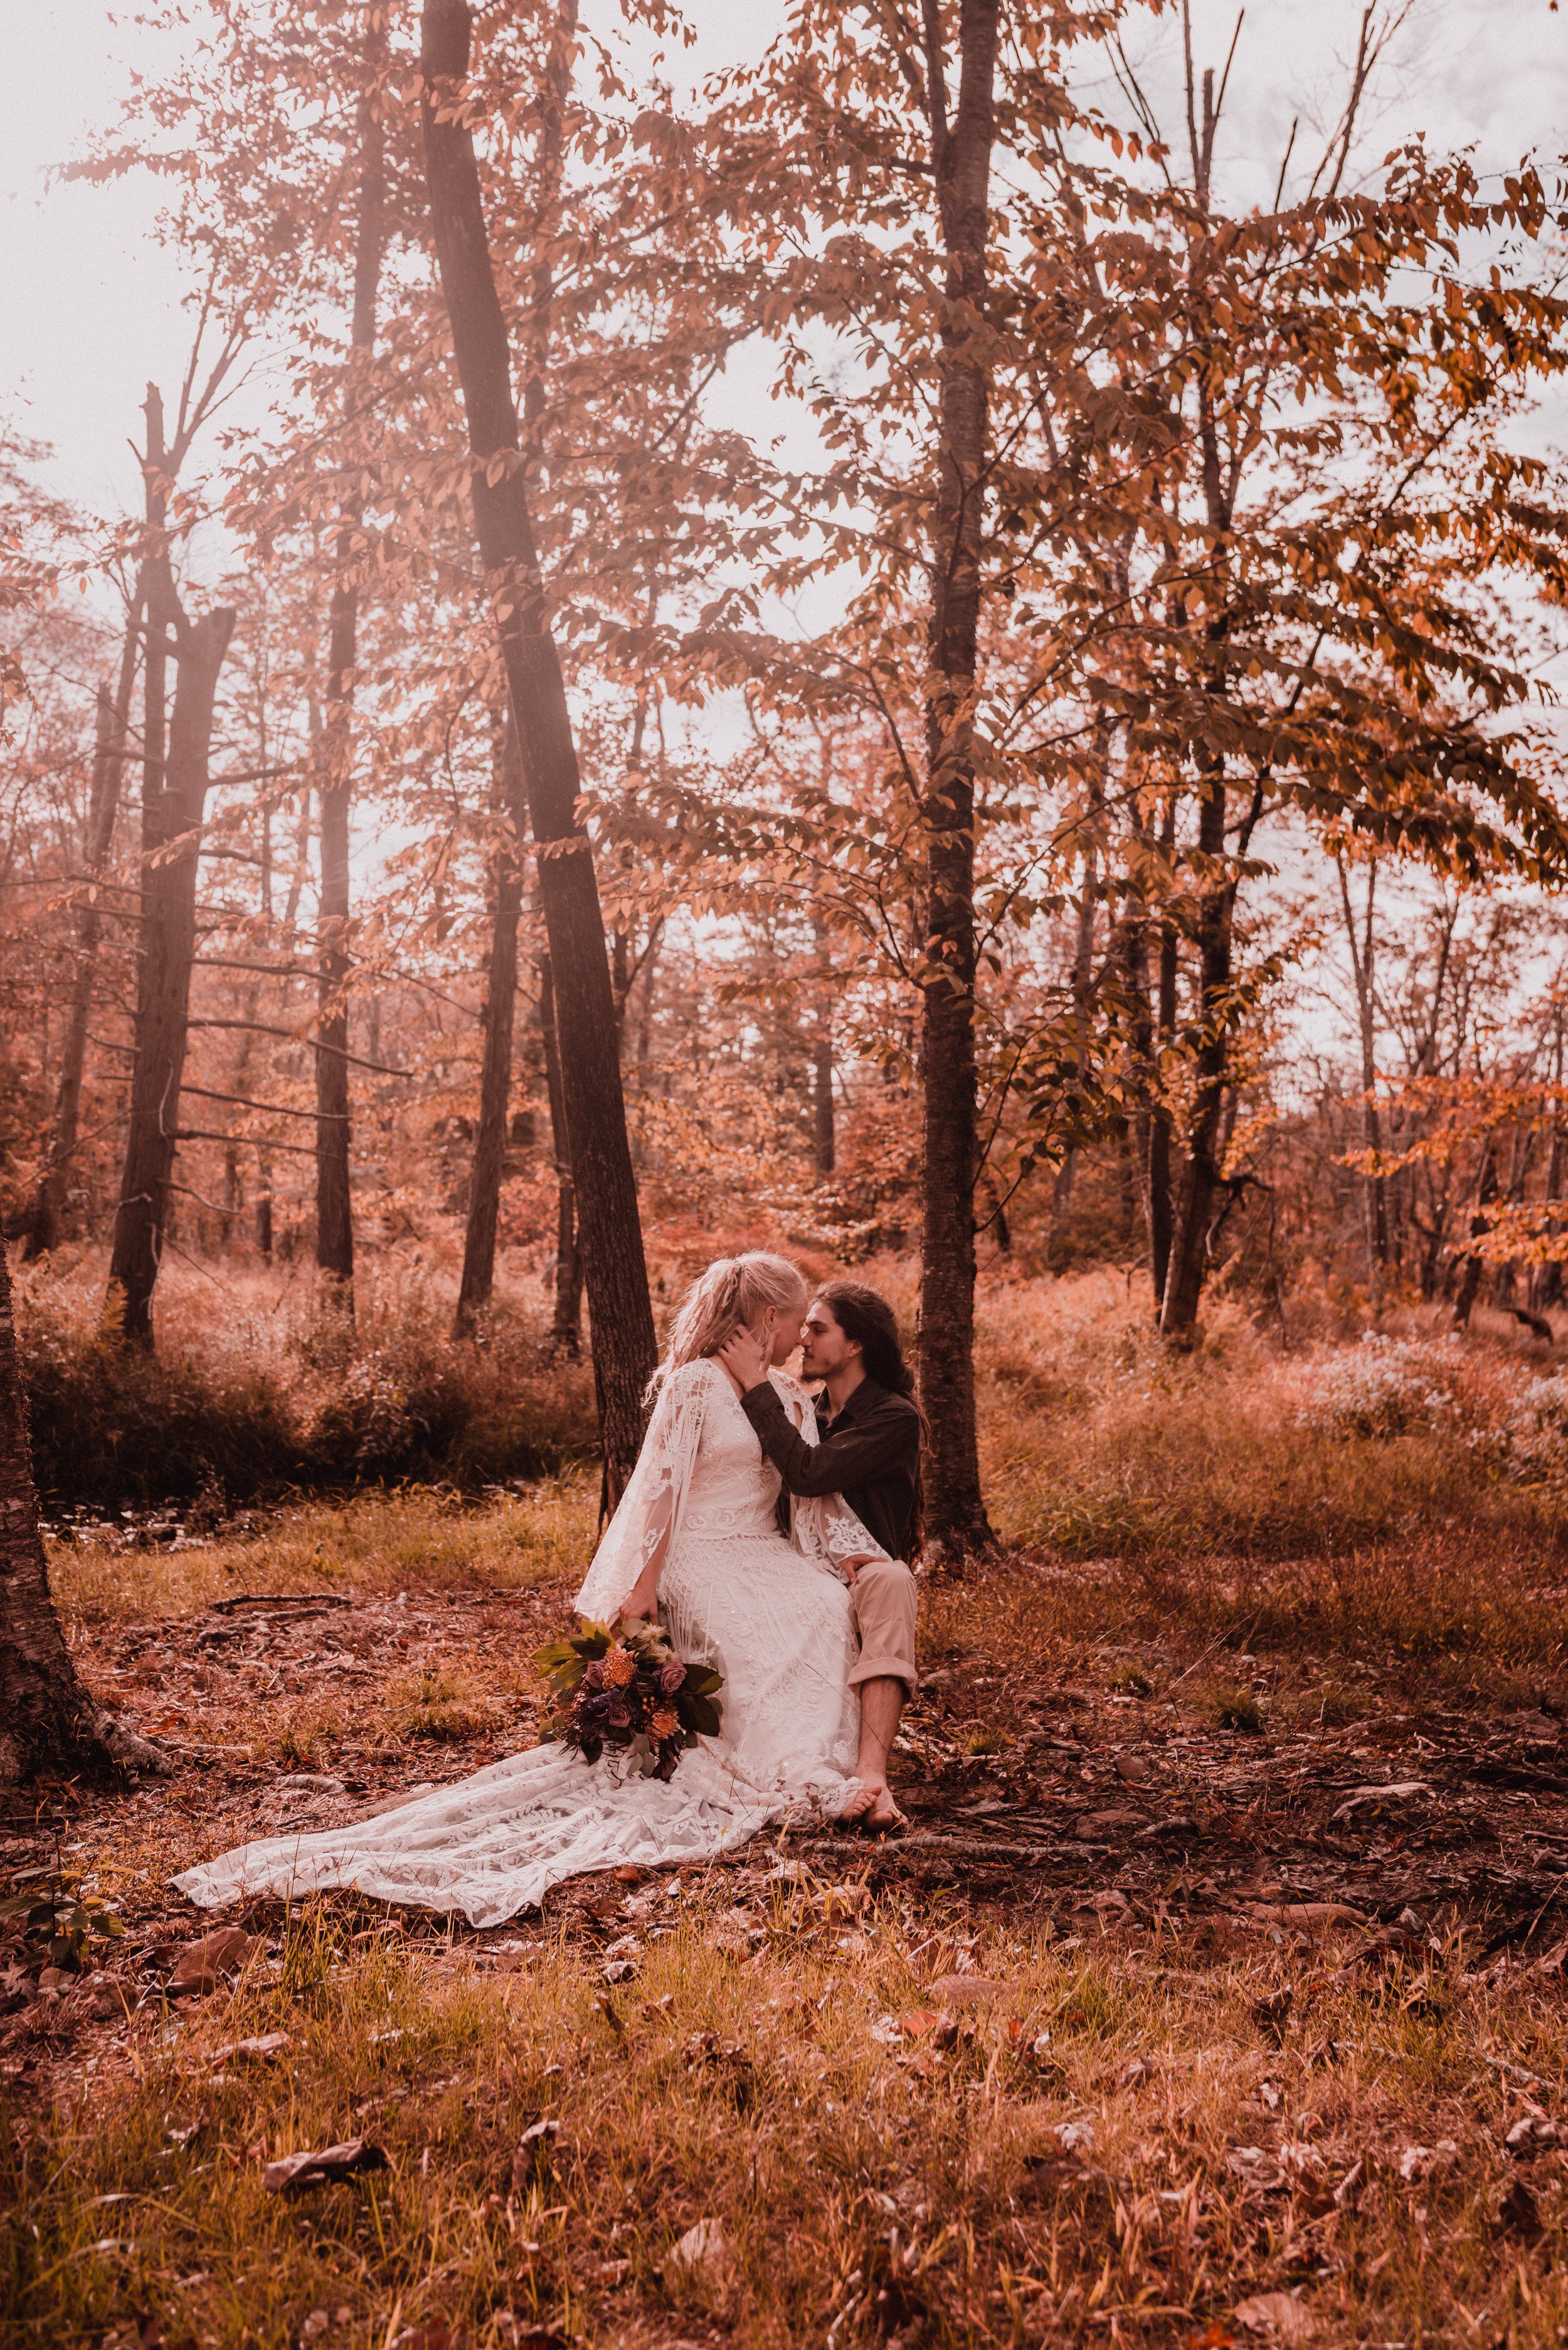 Madison + Jaz | Woodland Elopement | Sabillasville Maryland | Caboose Farm Wedding Photographer | Caboose Farm Elopement Photographer-184.jpg